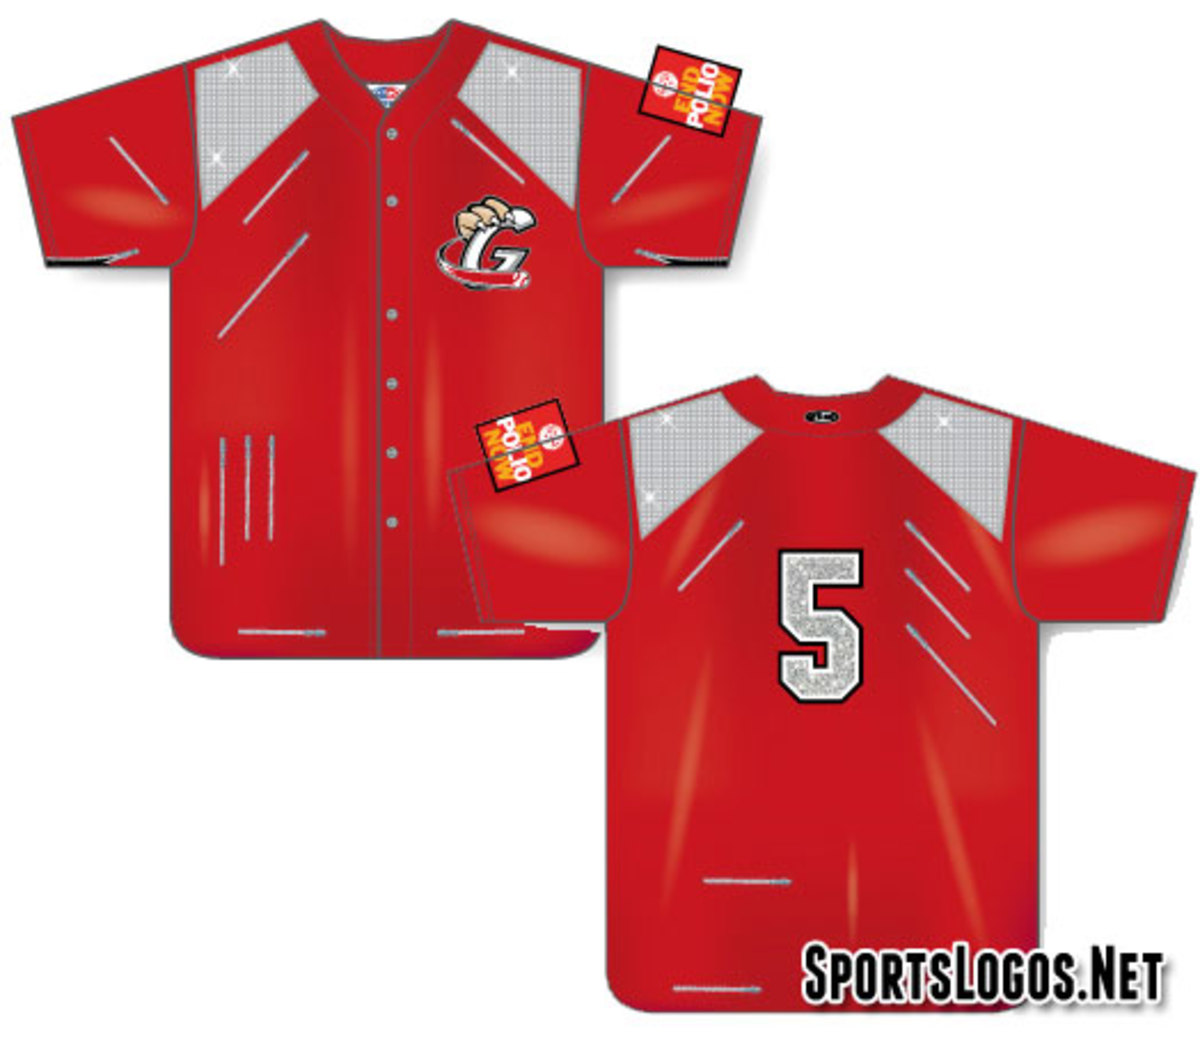 Minor League Team Wear Michael Jackson-Themed Uniforms Sports Illustrated